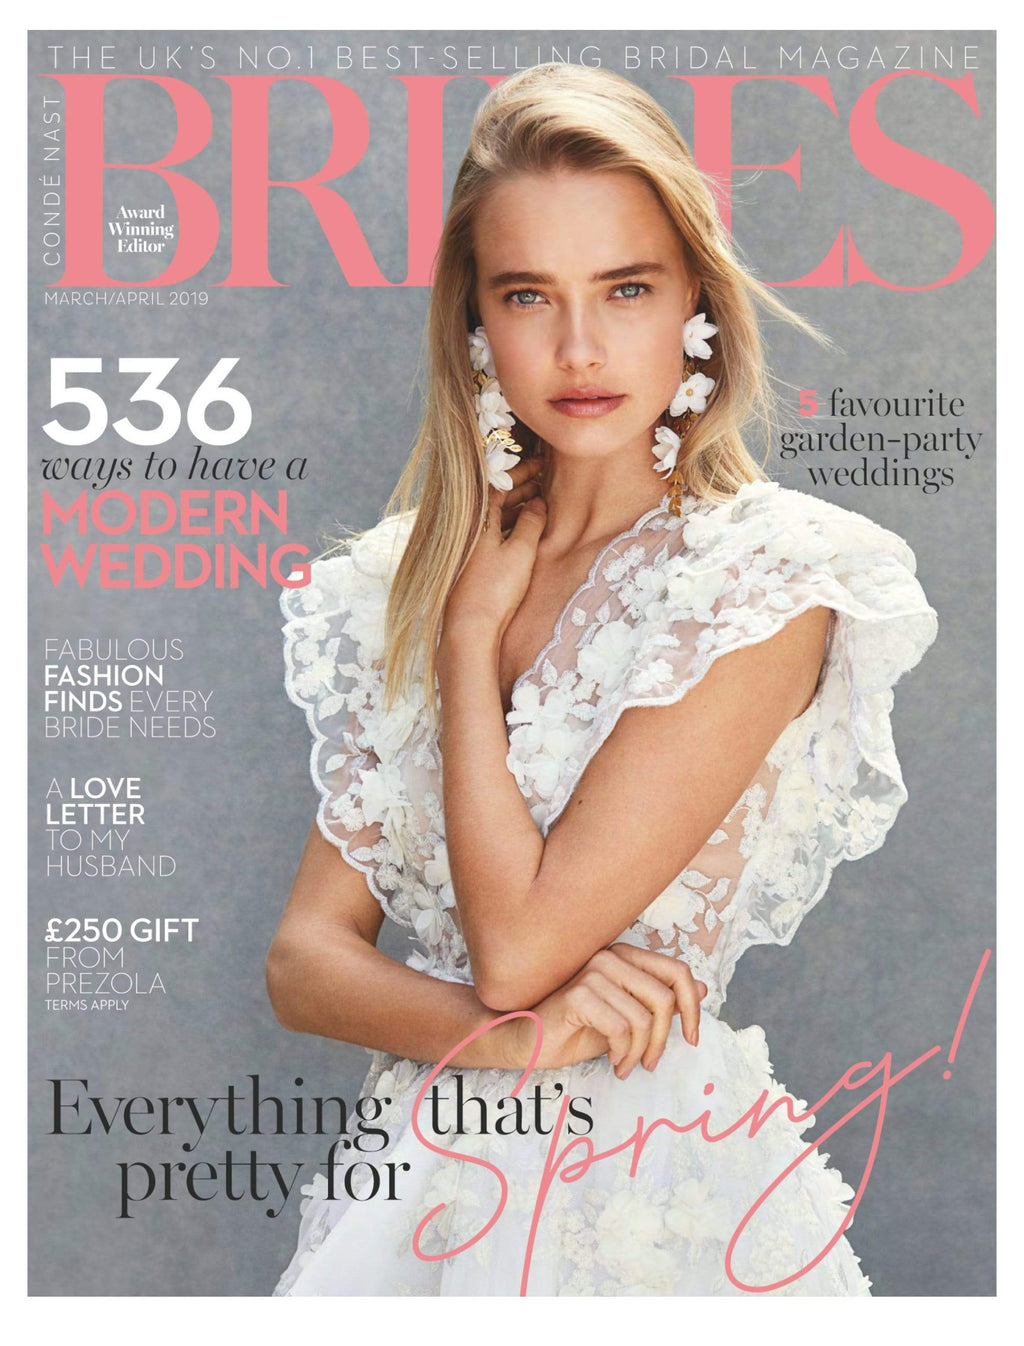 THE NEW BRIDAL GIFT BOX #MYBRIDEBOX | Belle Bridal Magazine